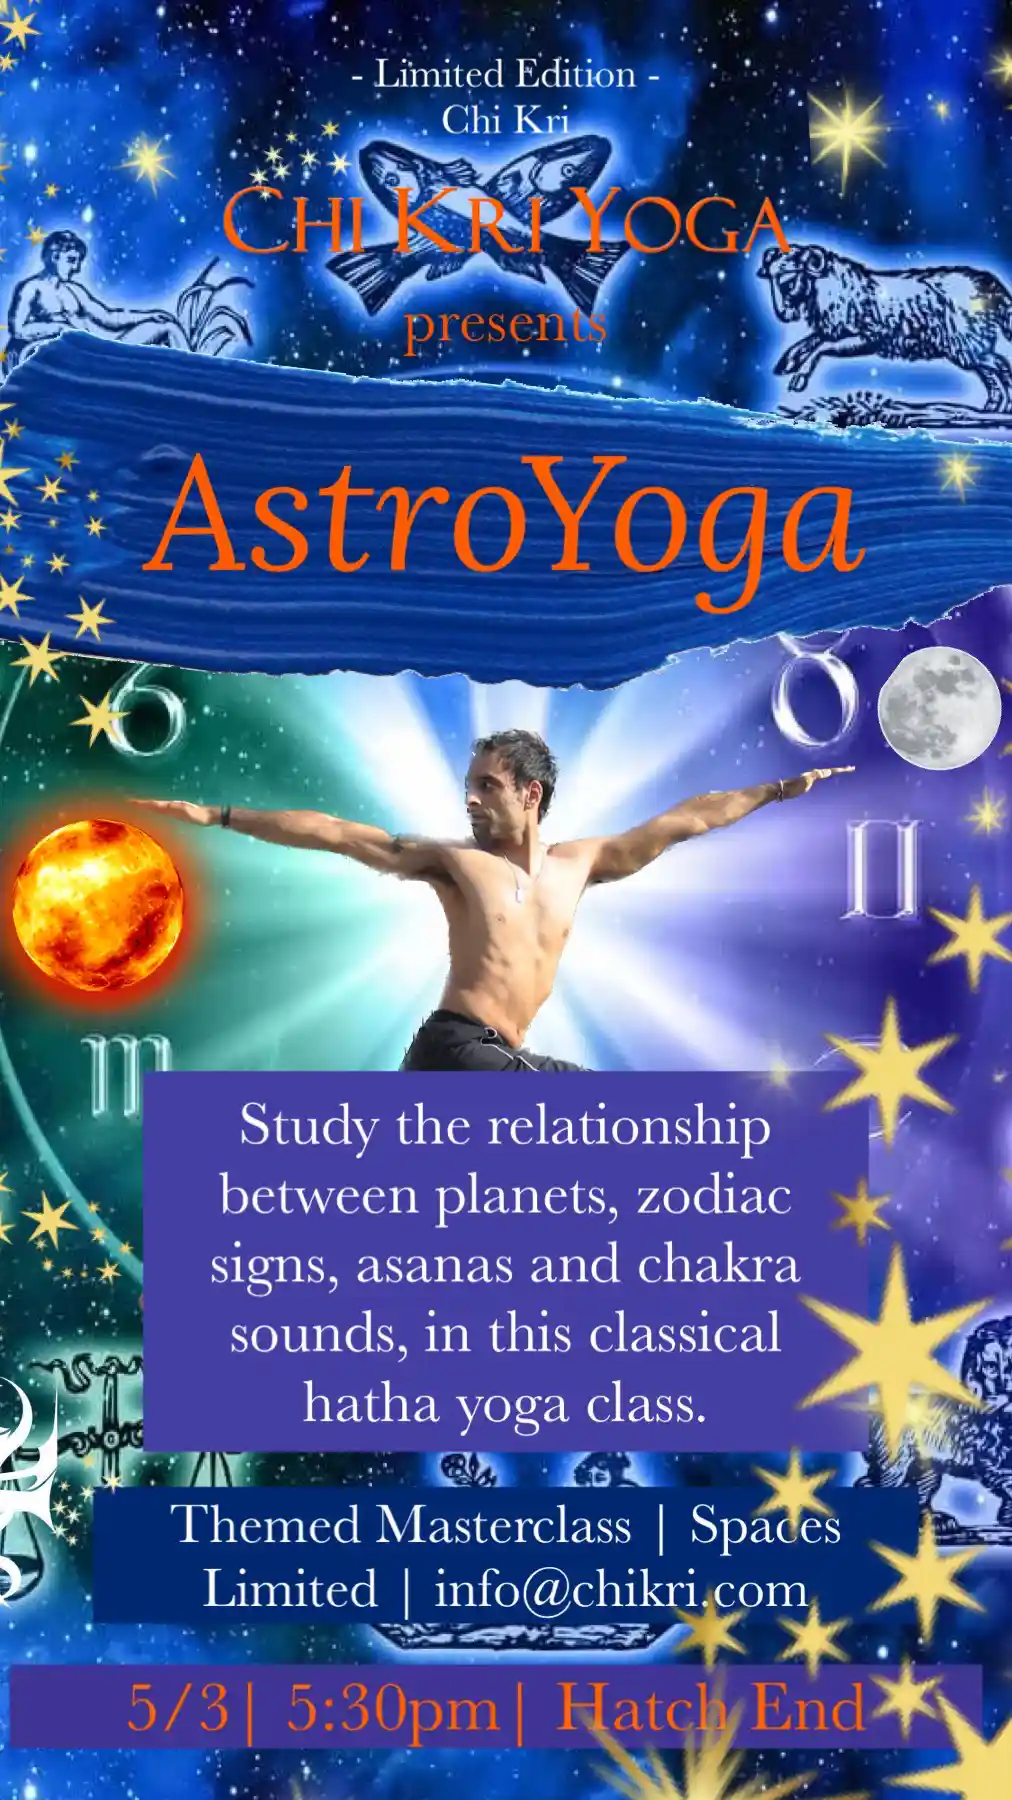 Astro Yoga